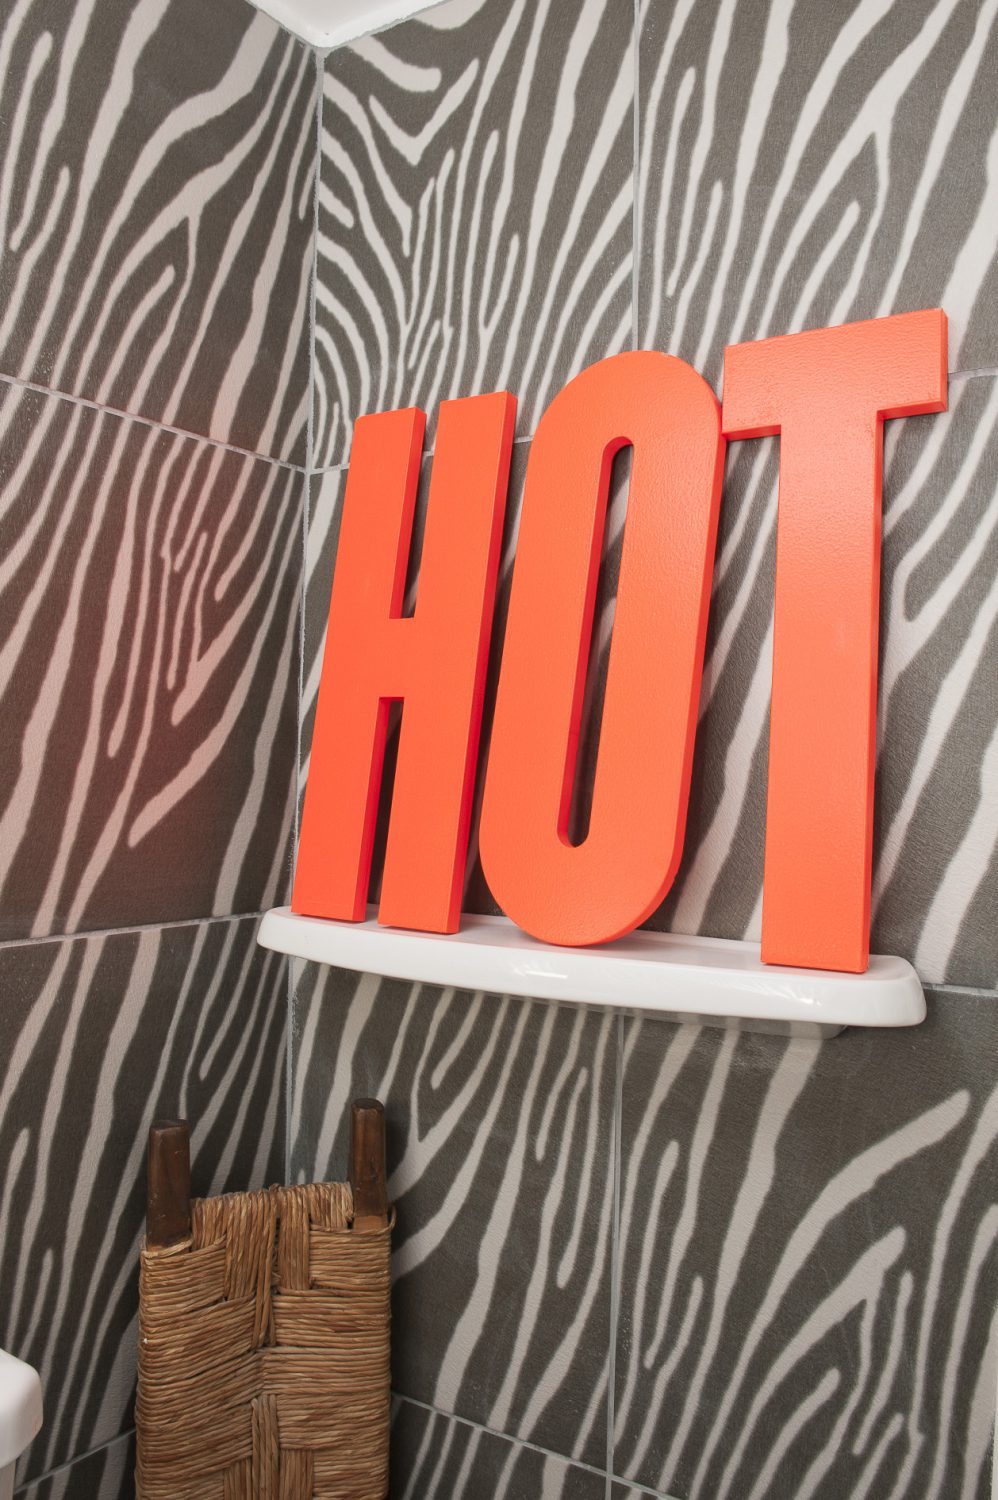 Giant neon ‘HOT’ lettering provides a pleasingly vibrant colour contrast to the monochrome zebra print ceramic tiles